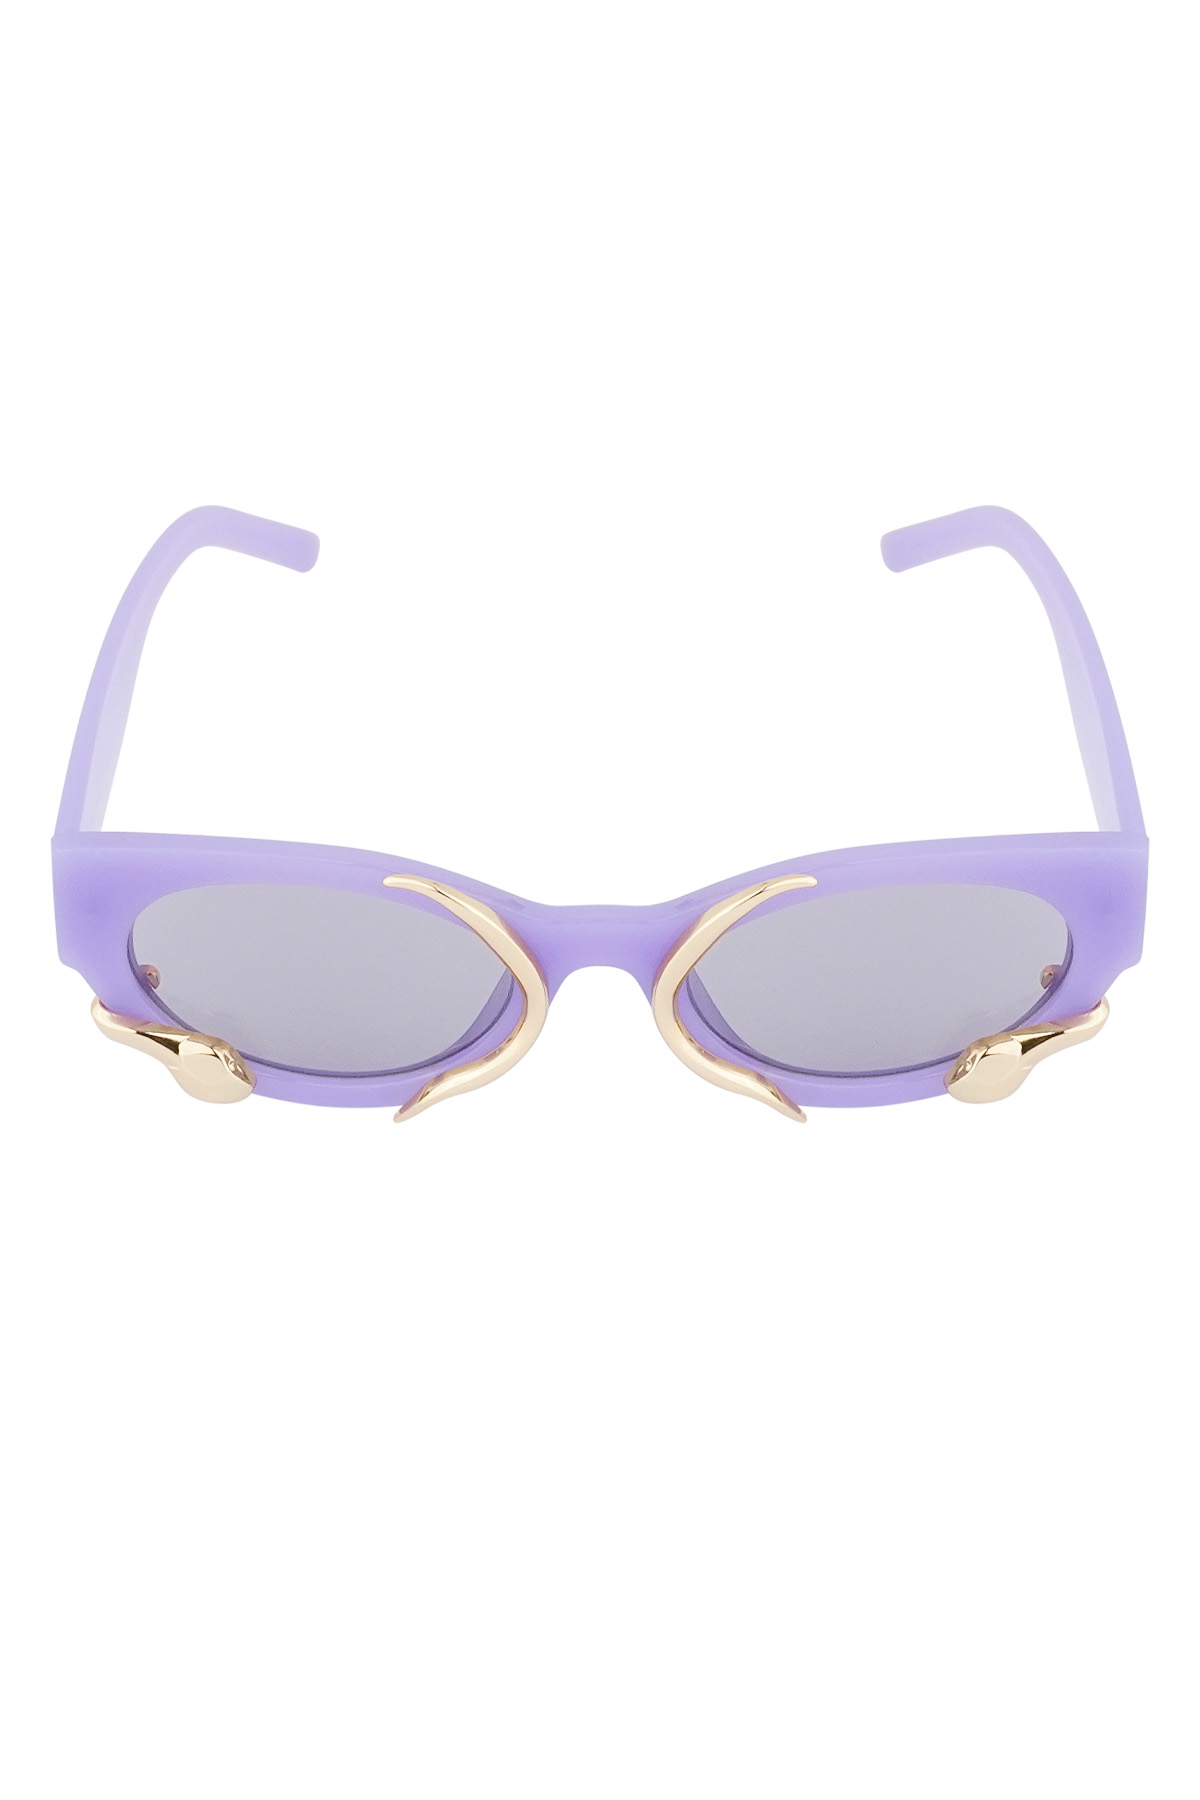 Snake sunglasses - purple h5 Picture5